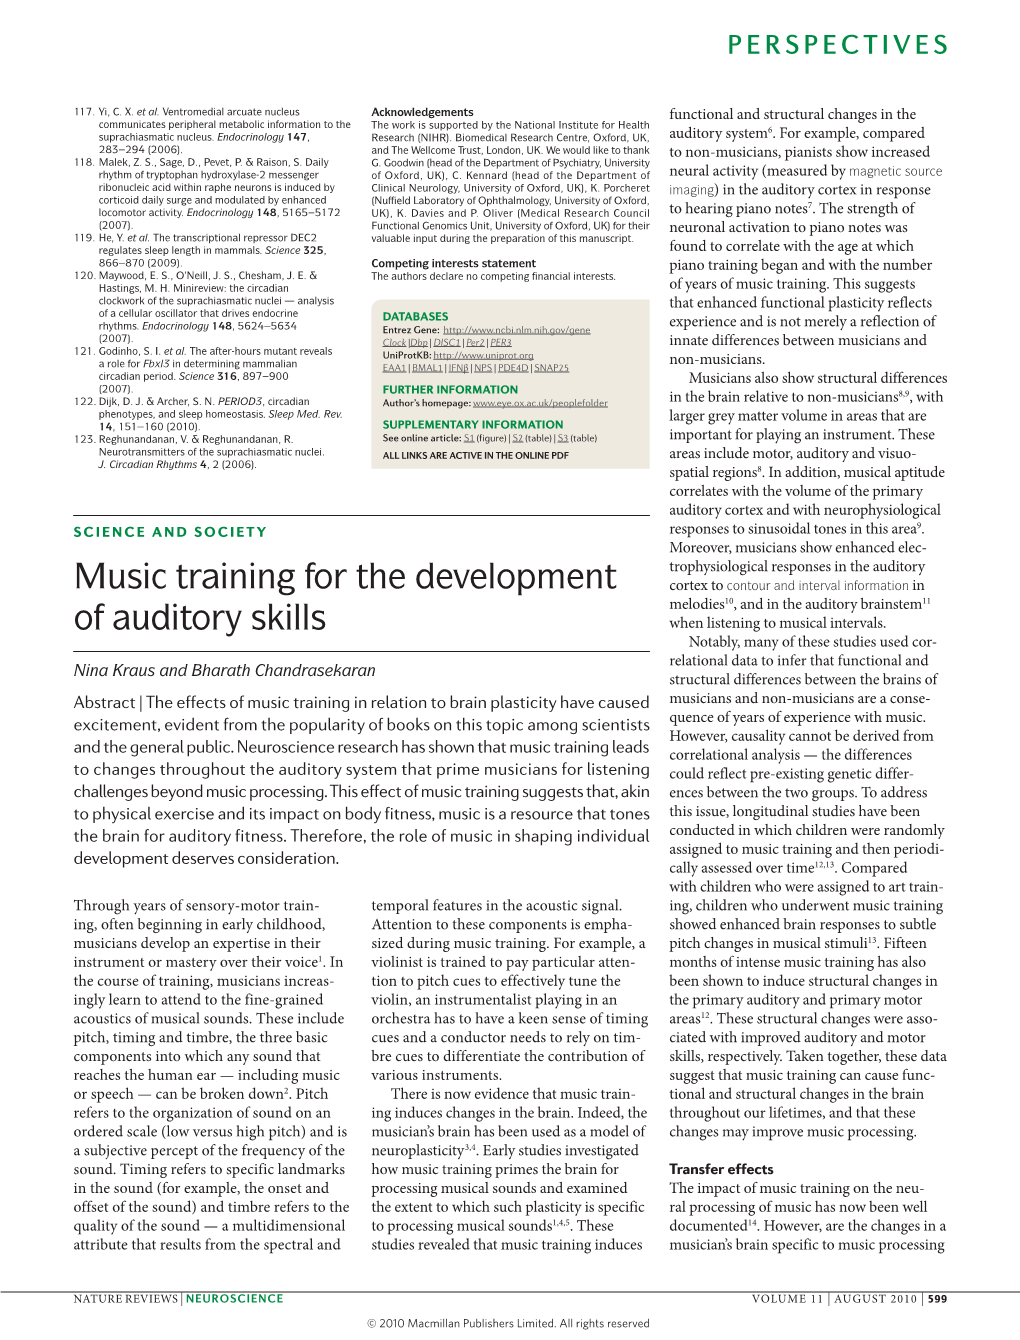 Music Training for the Development of Auditory Skills